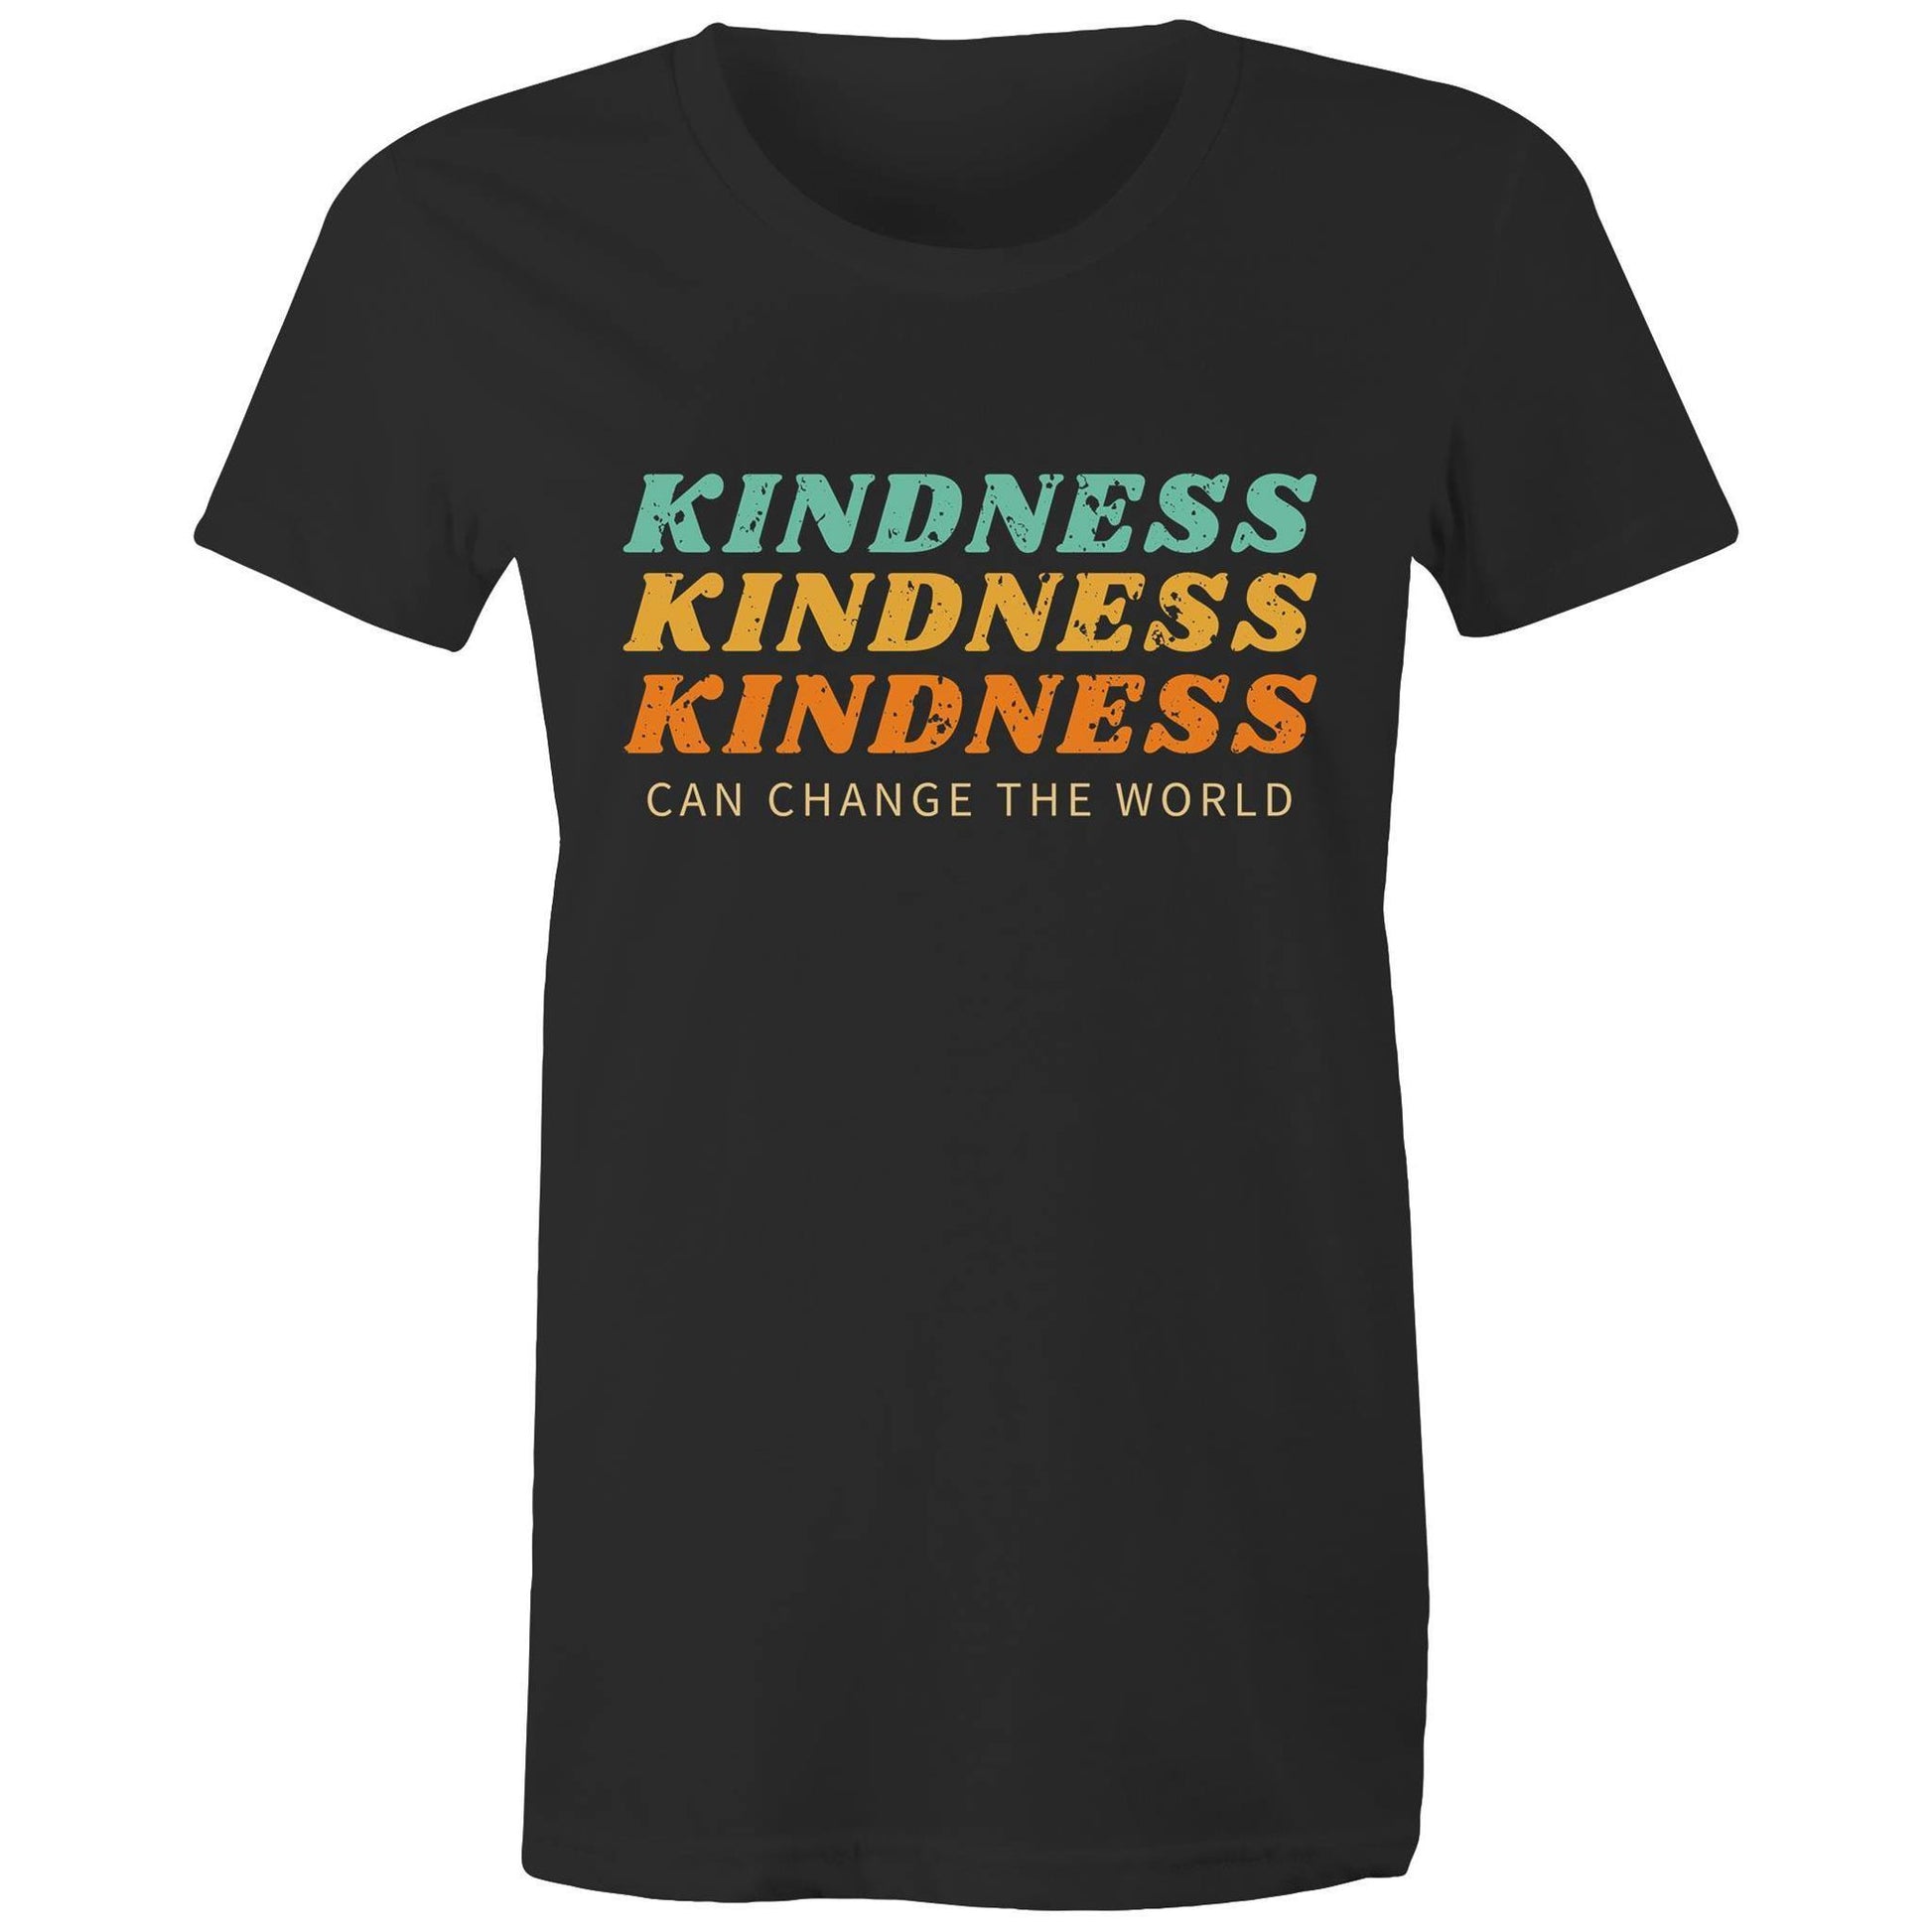 Kindness Can Change The World - Women's T-shirt Black Womens T-shirt Retro Womens